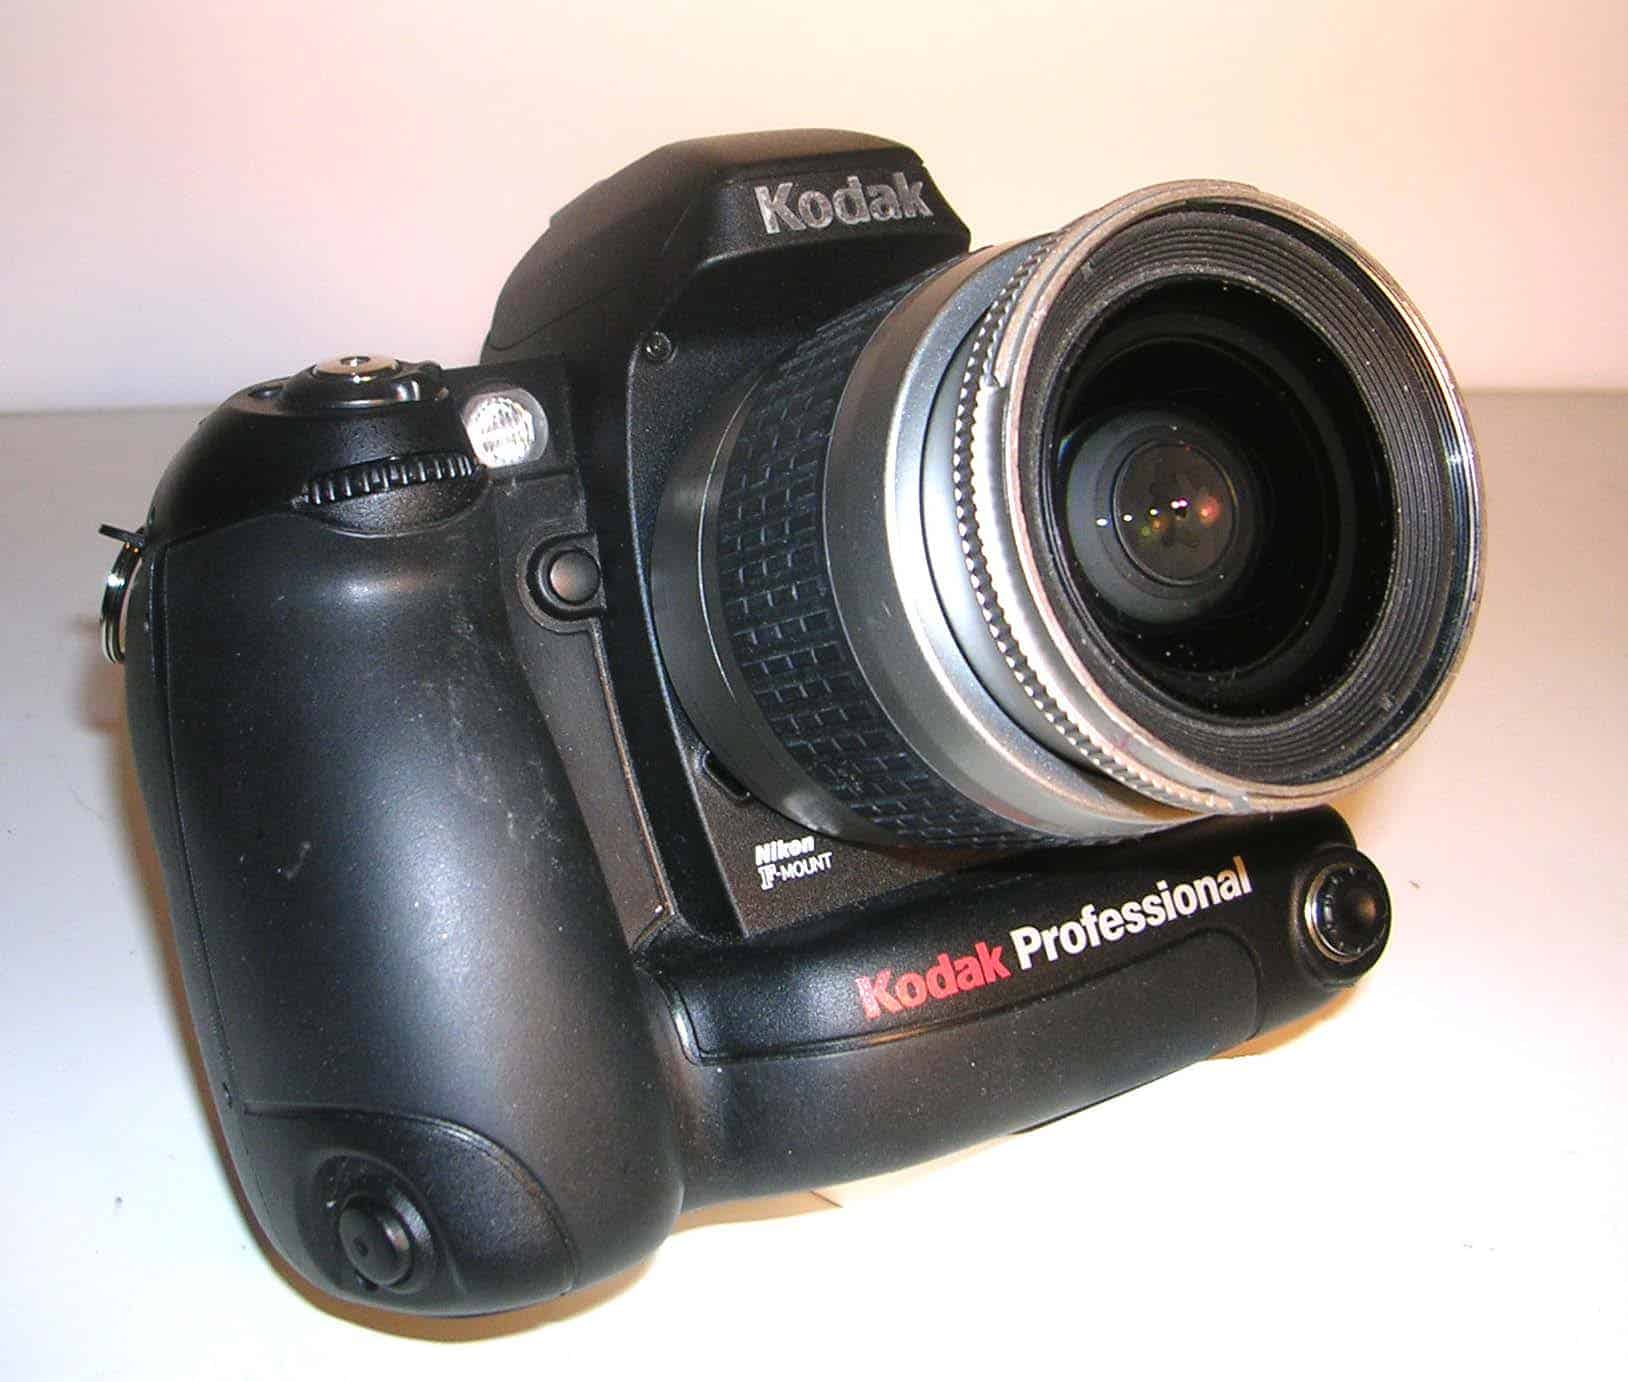 Kodak DCS - Wikipedia